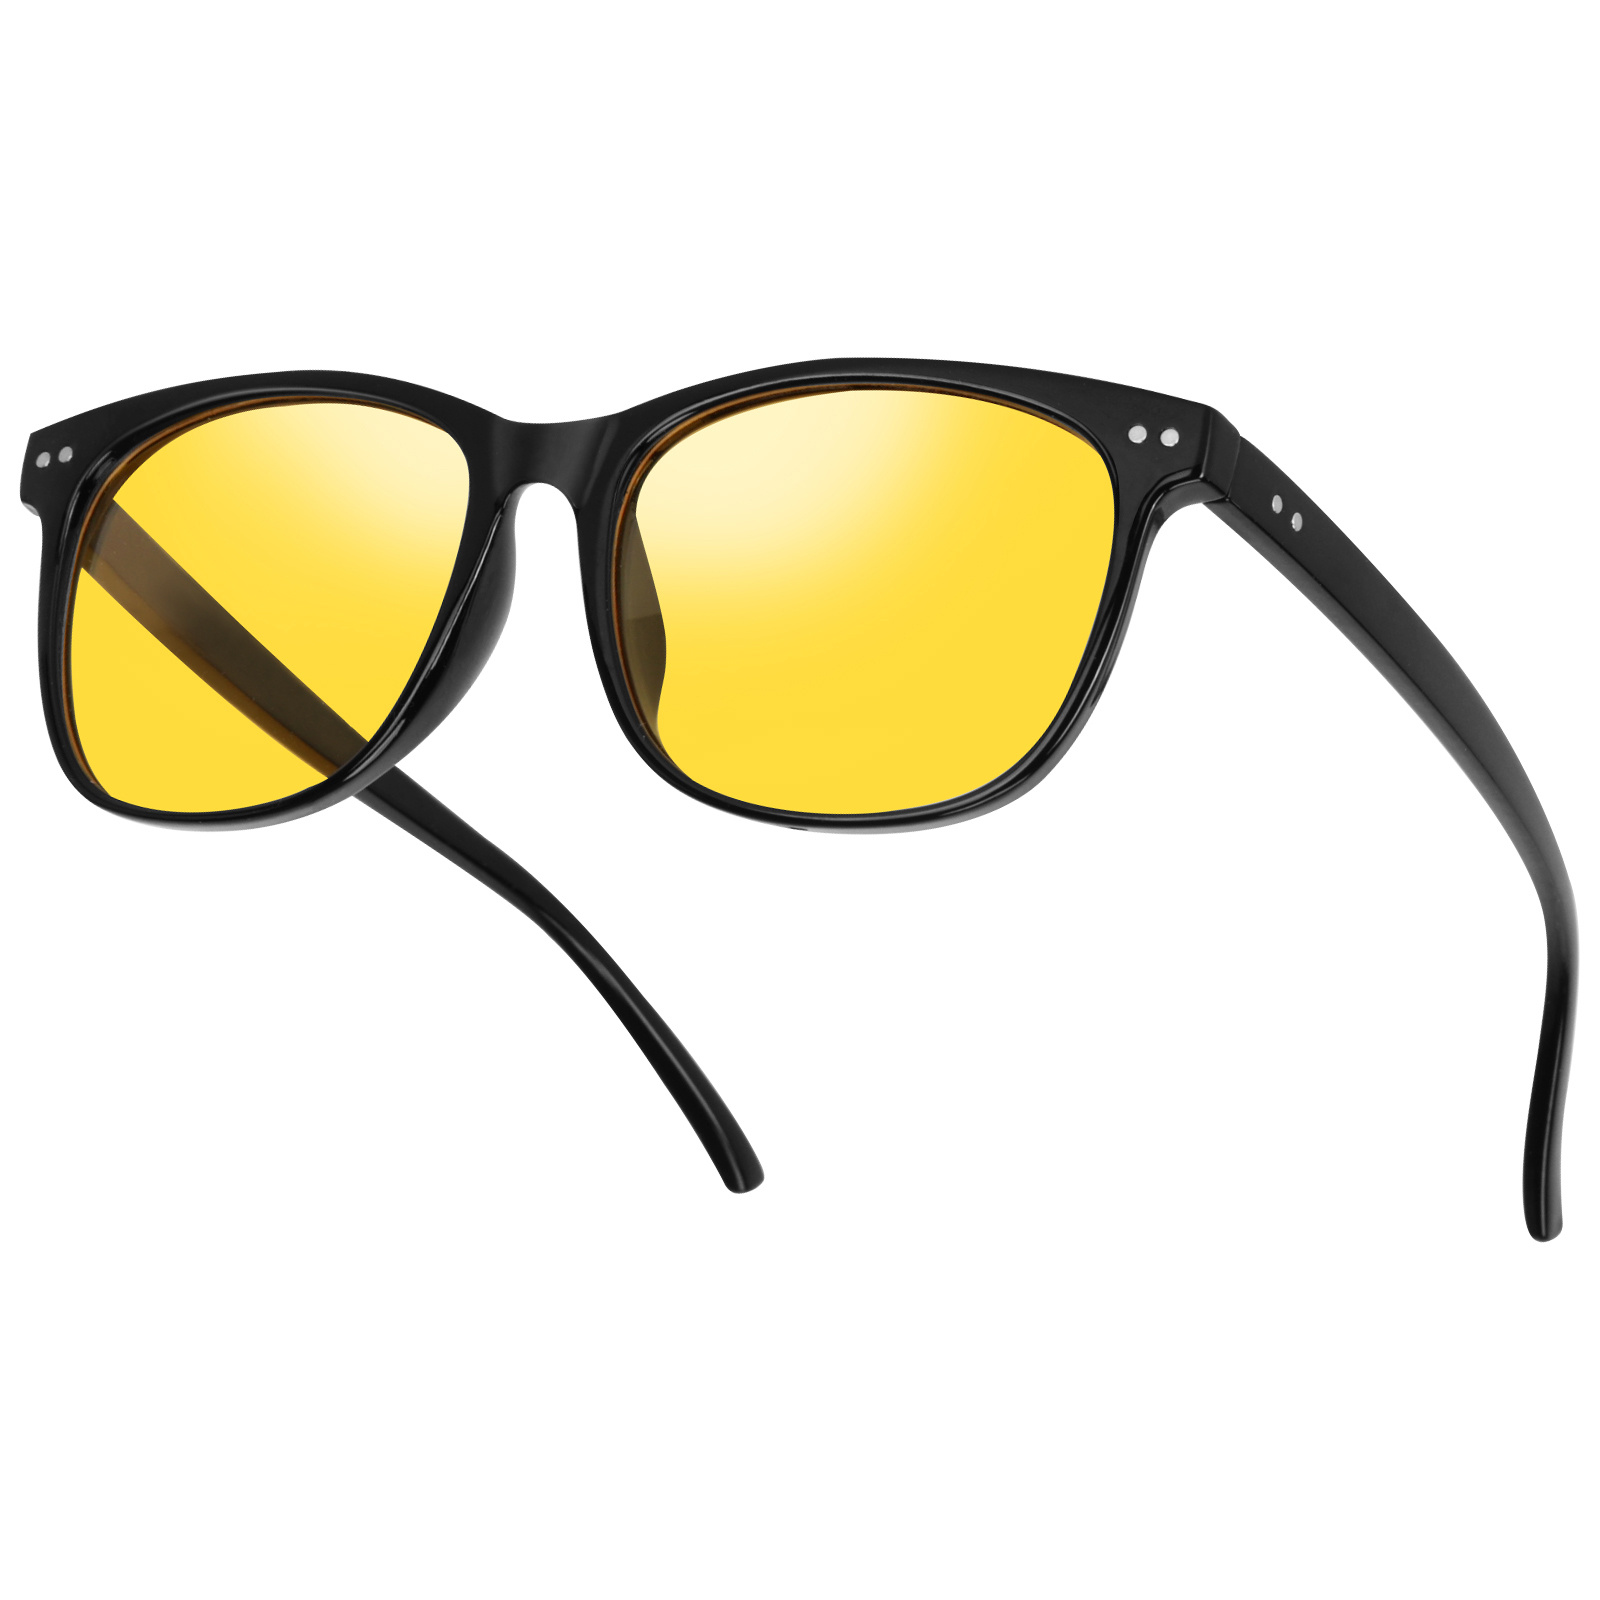 Night Vision Driving Glasses Polarized Anti-glare Clear Nighttime Glasses Men & Women Fashion UV Protection